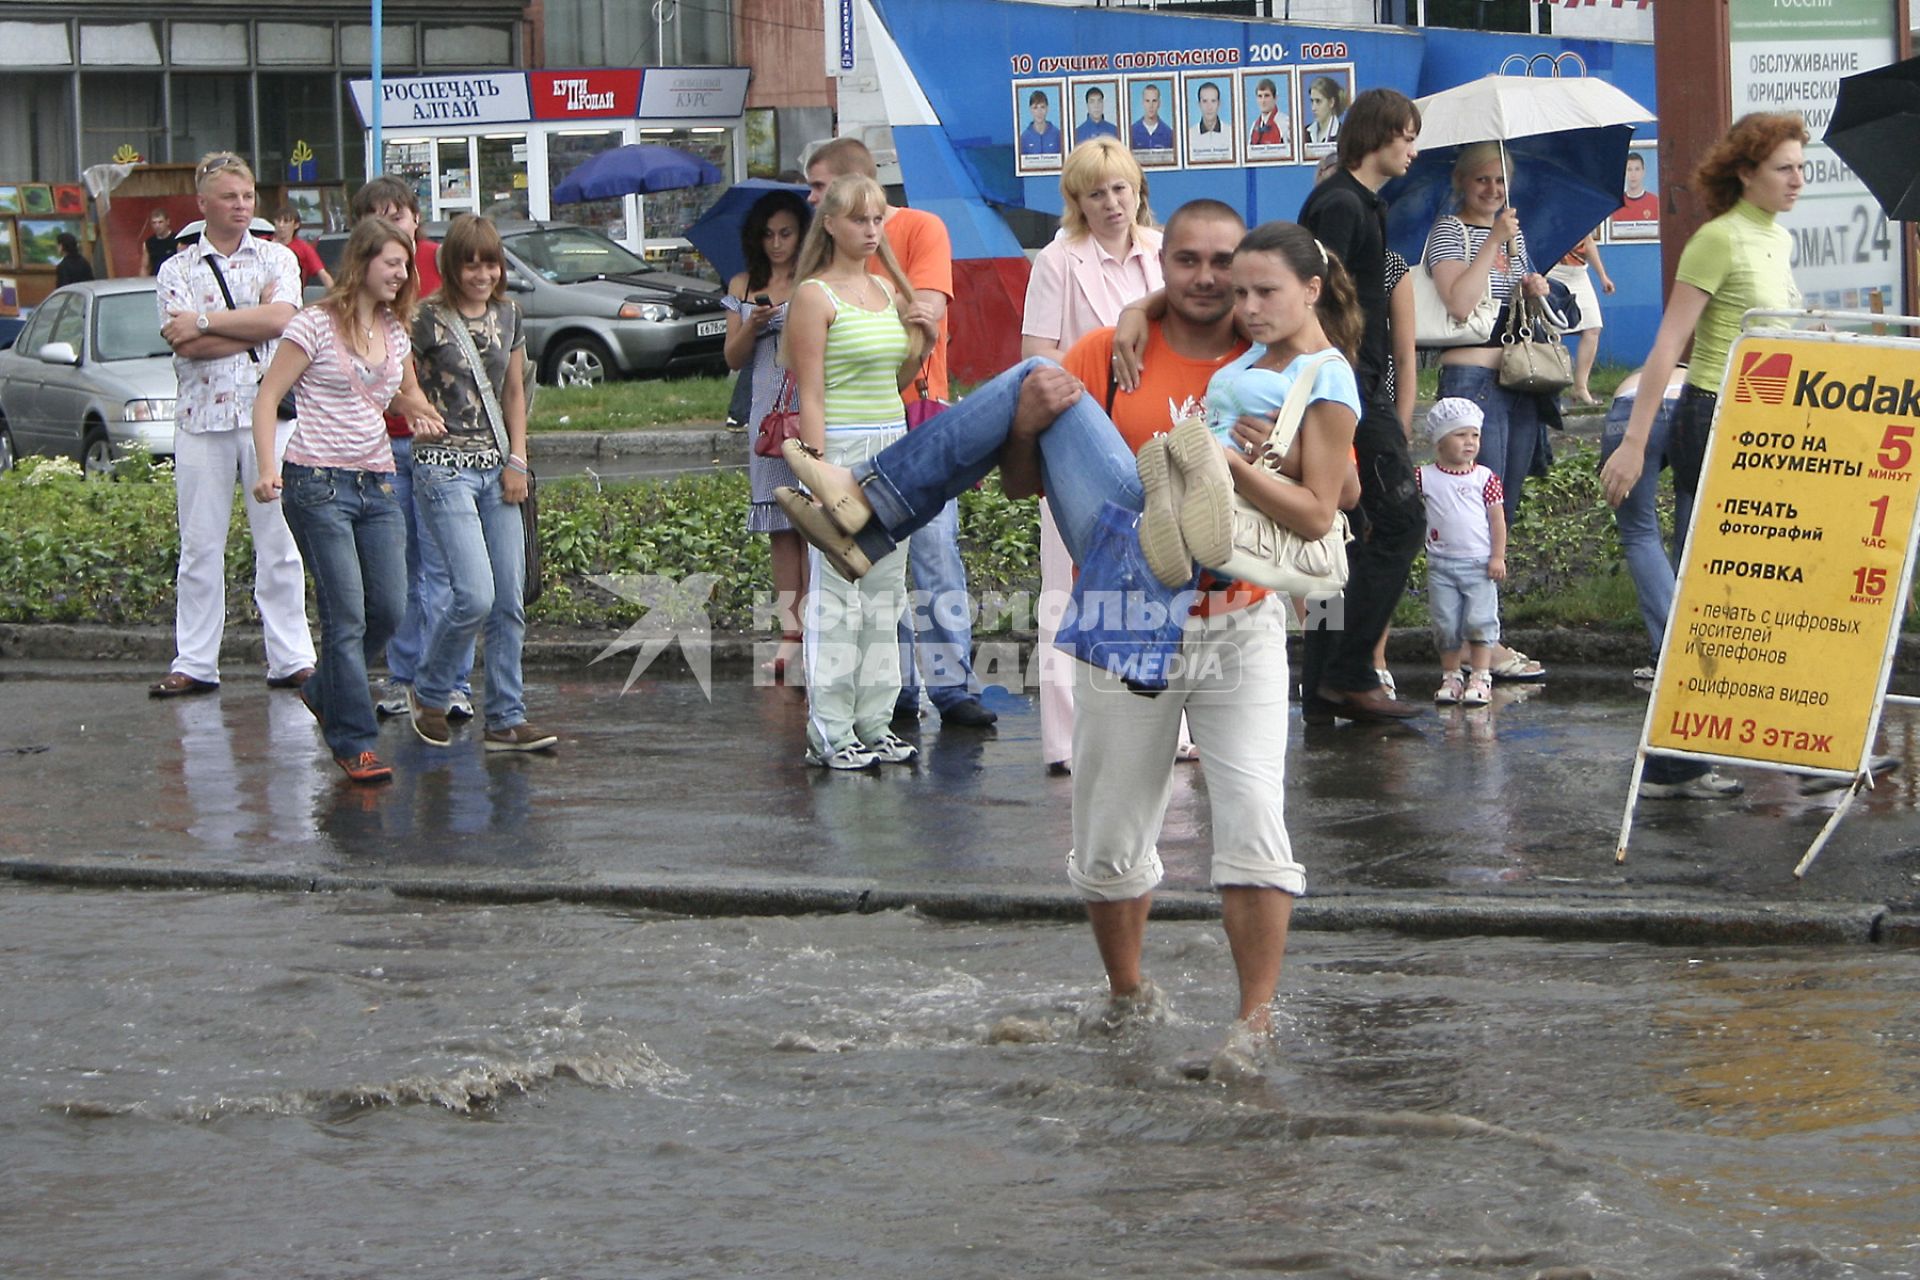 Мужчина переносит девушку через дорогу залитую водой после проливного дождя.